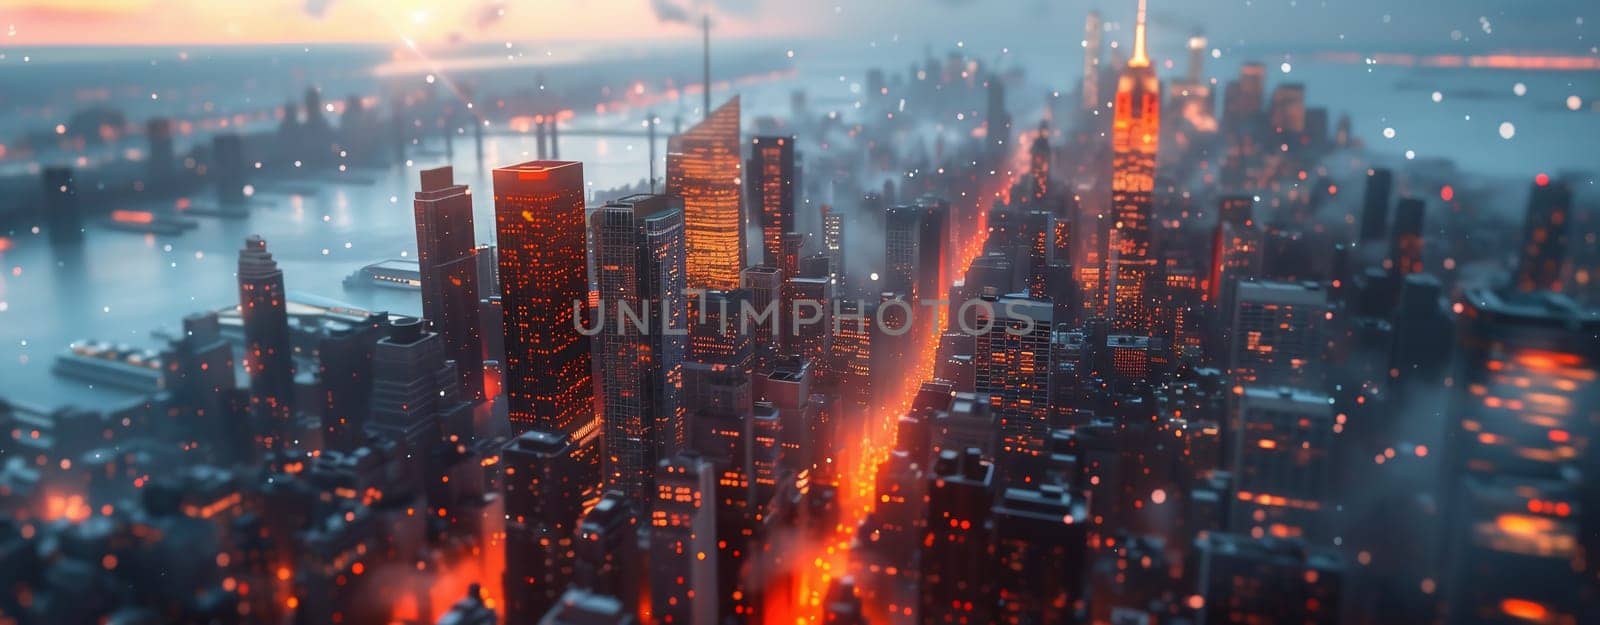 Collapse fantasies, urban apocalypse, cataclysms. High quality photo